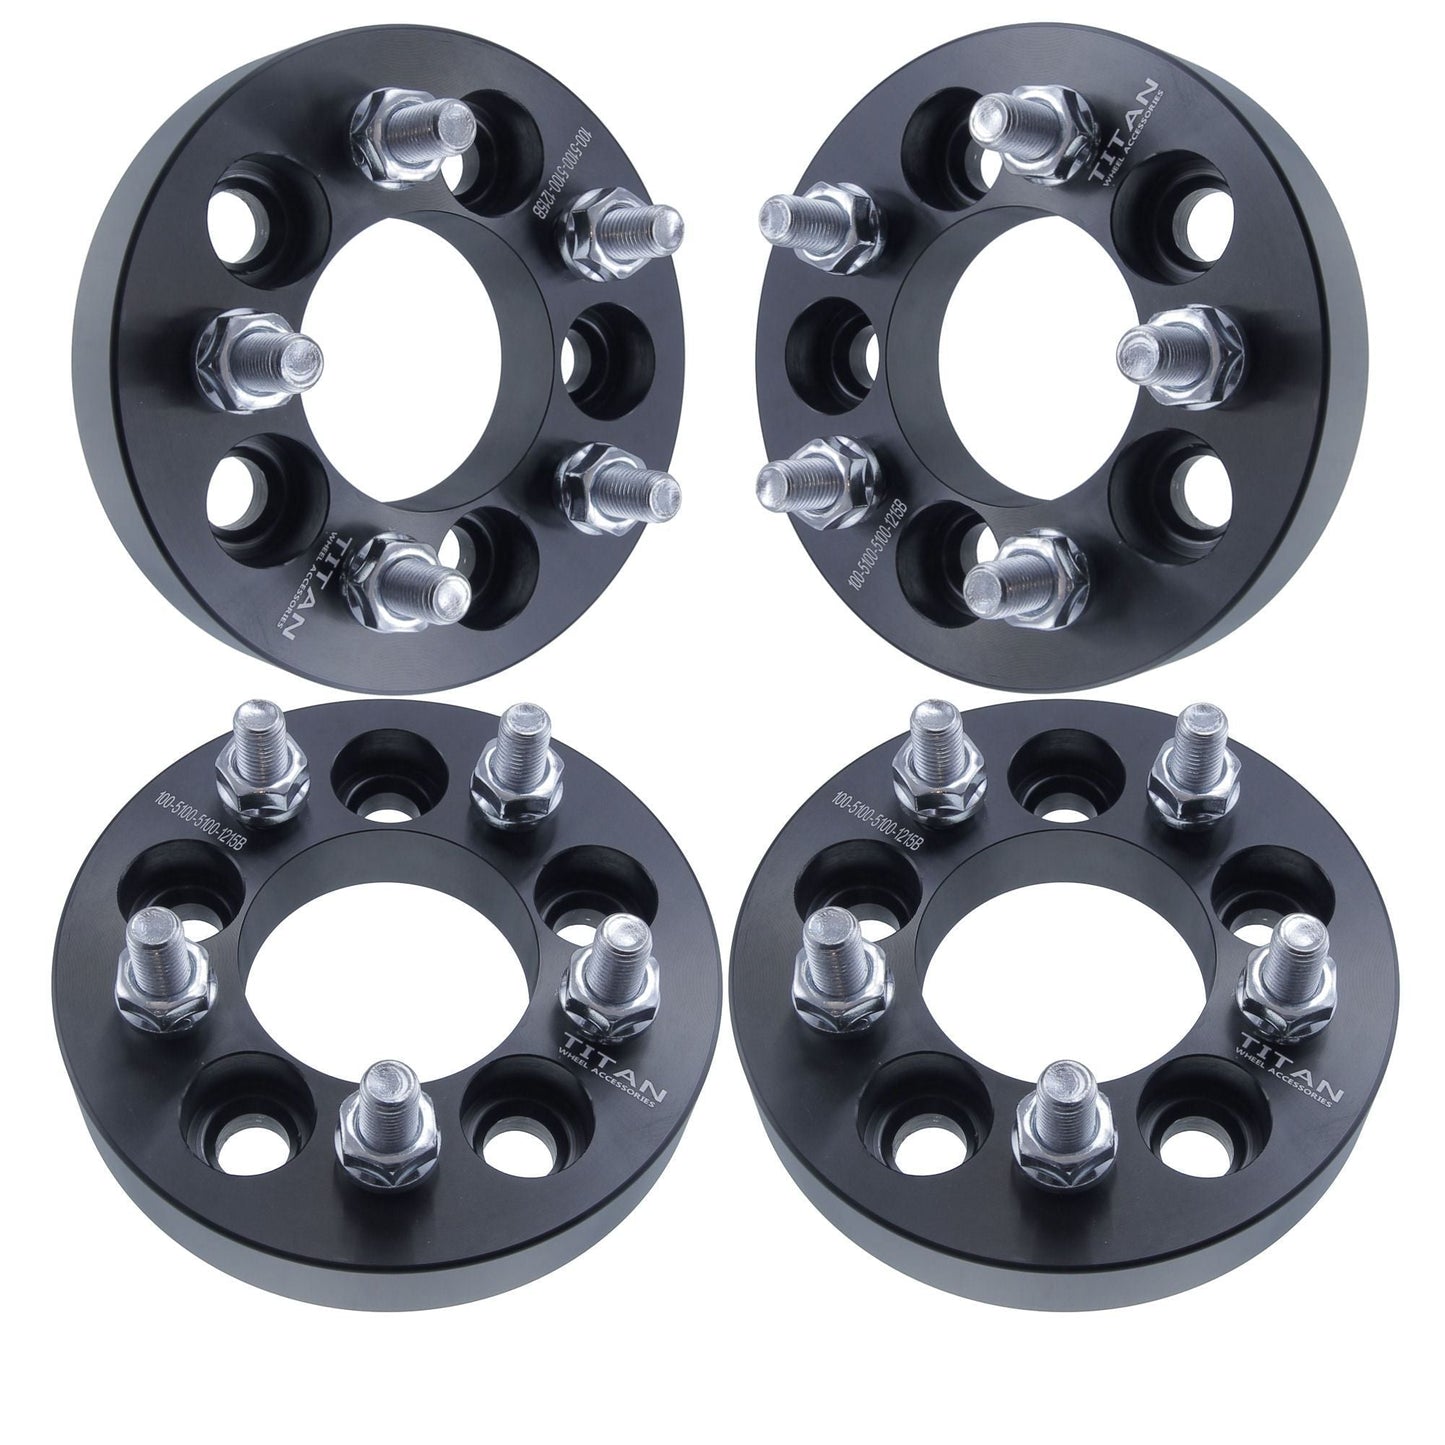 32mm (1.25") Titan Wheel Spacers for Scion Toyota Lexus | 5x114.3 (5x4.5) | 12x1.5 Studs | Set of 4 | Titan Wheel Accessories